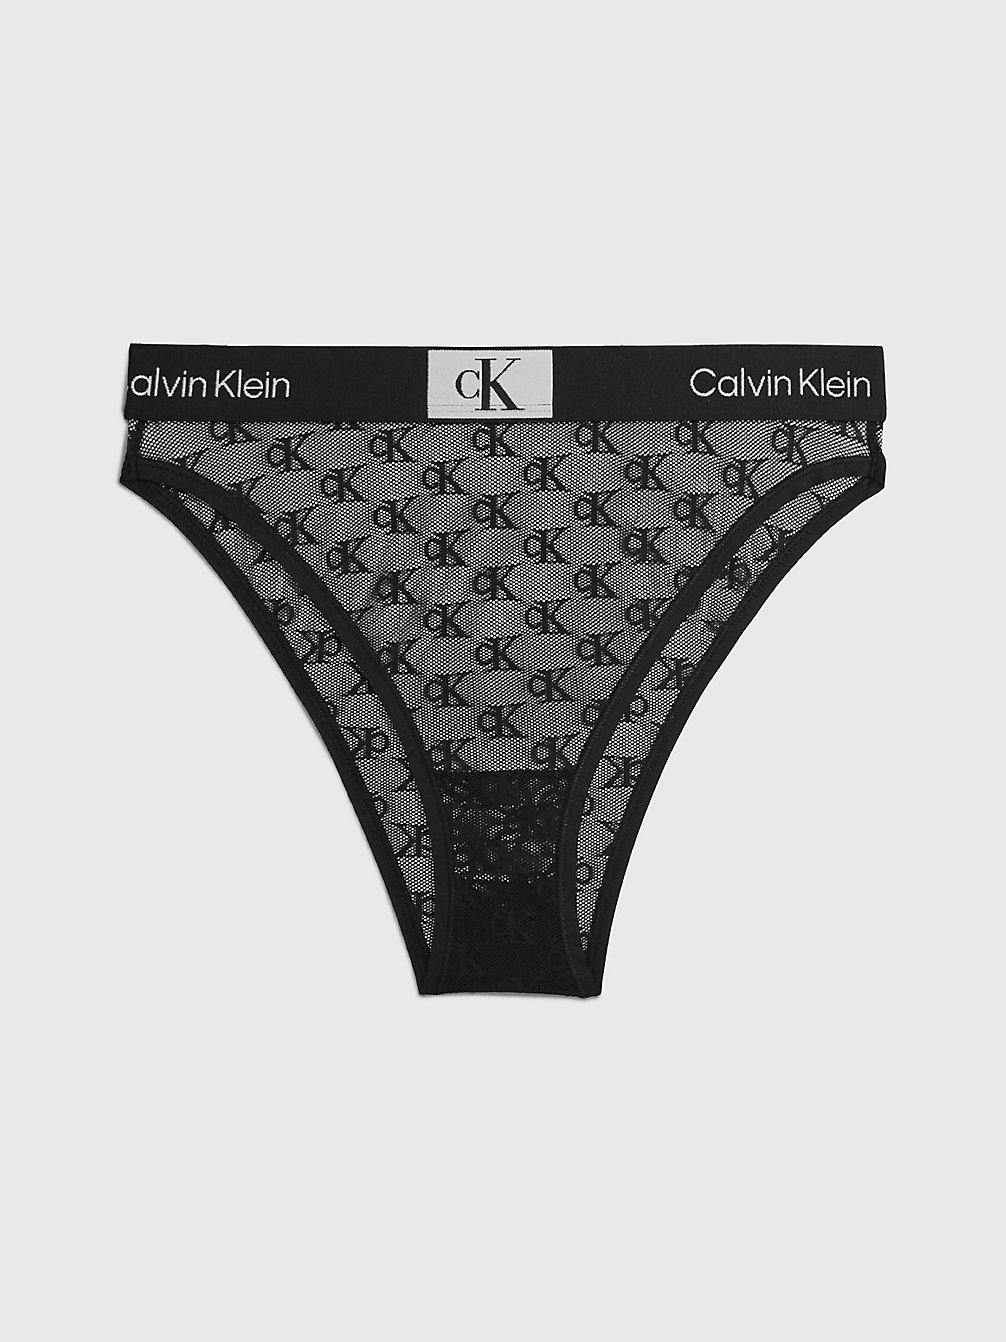 BLACK Lace Brazilian Briefs - Ck96 undefined women Calvin Klein